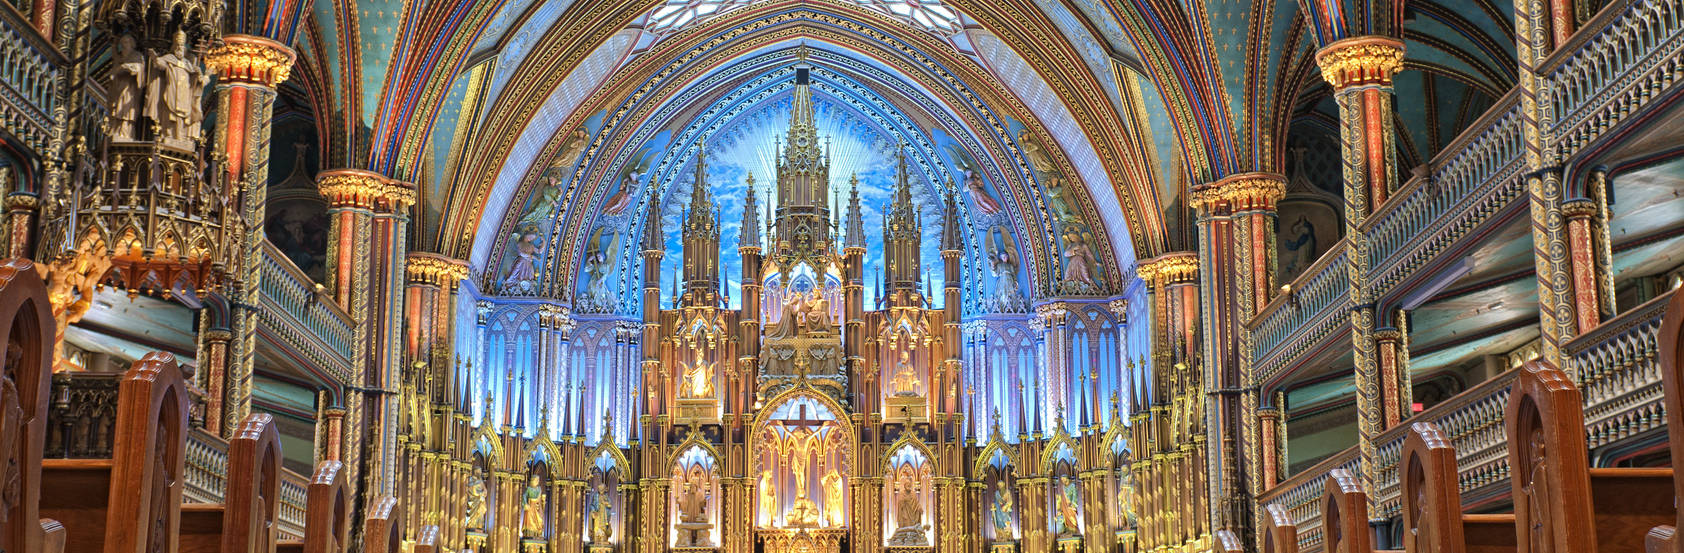 Montreal-Notre-Dame-kerk-Fotolia_32430390_M.jpg